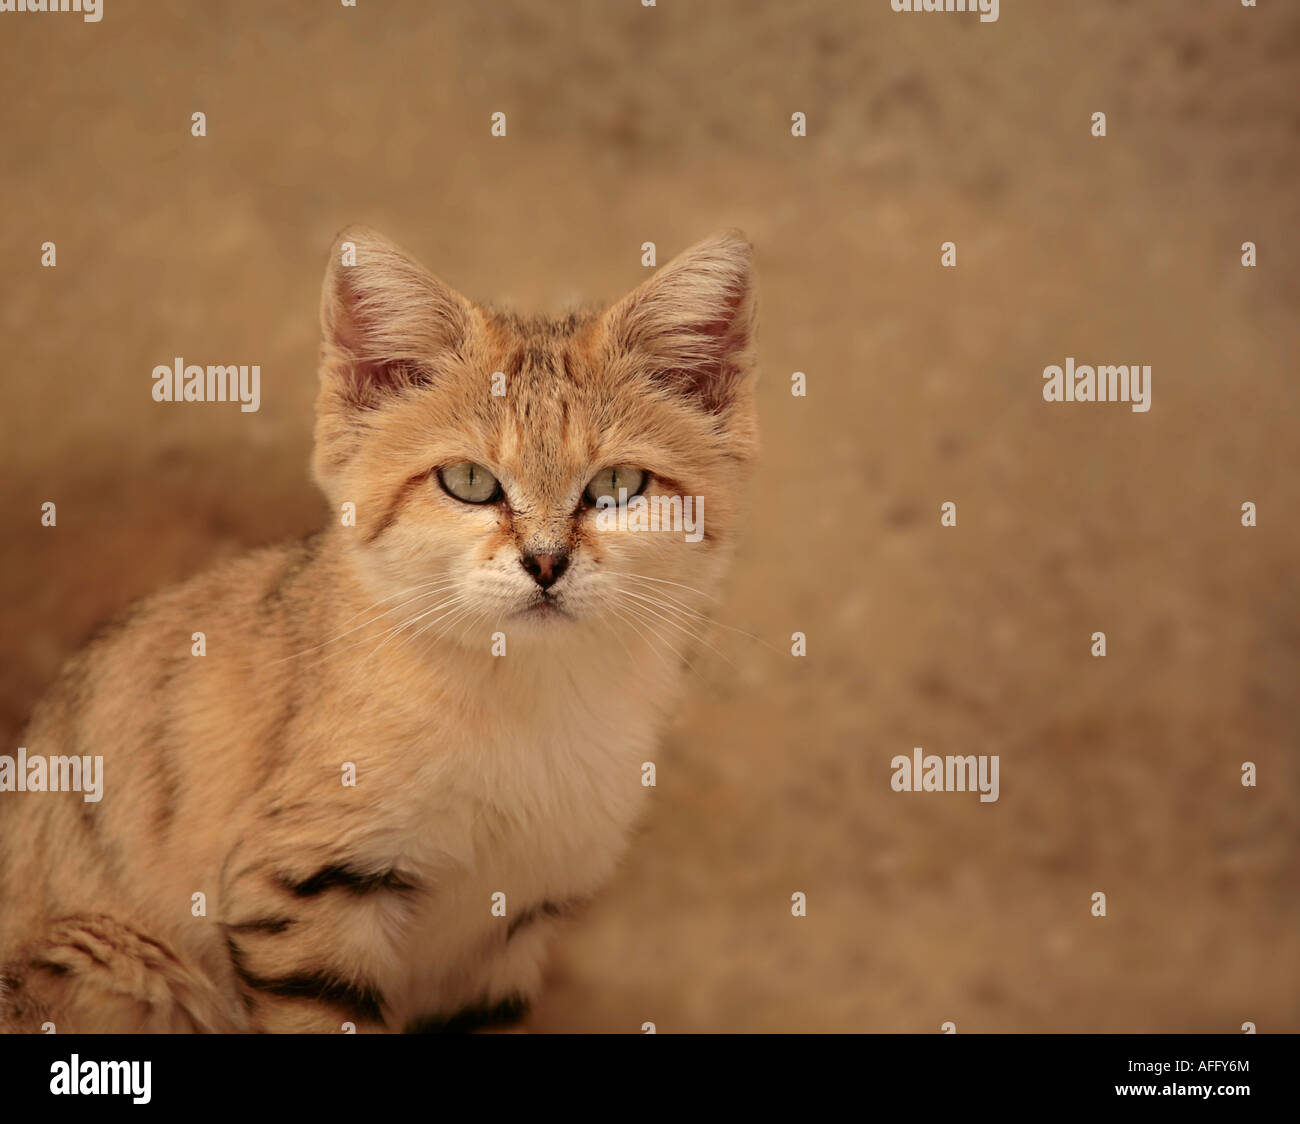 Arabian Sand Cat (Felis margarita) looking directly at the camera Stock Photo